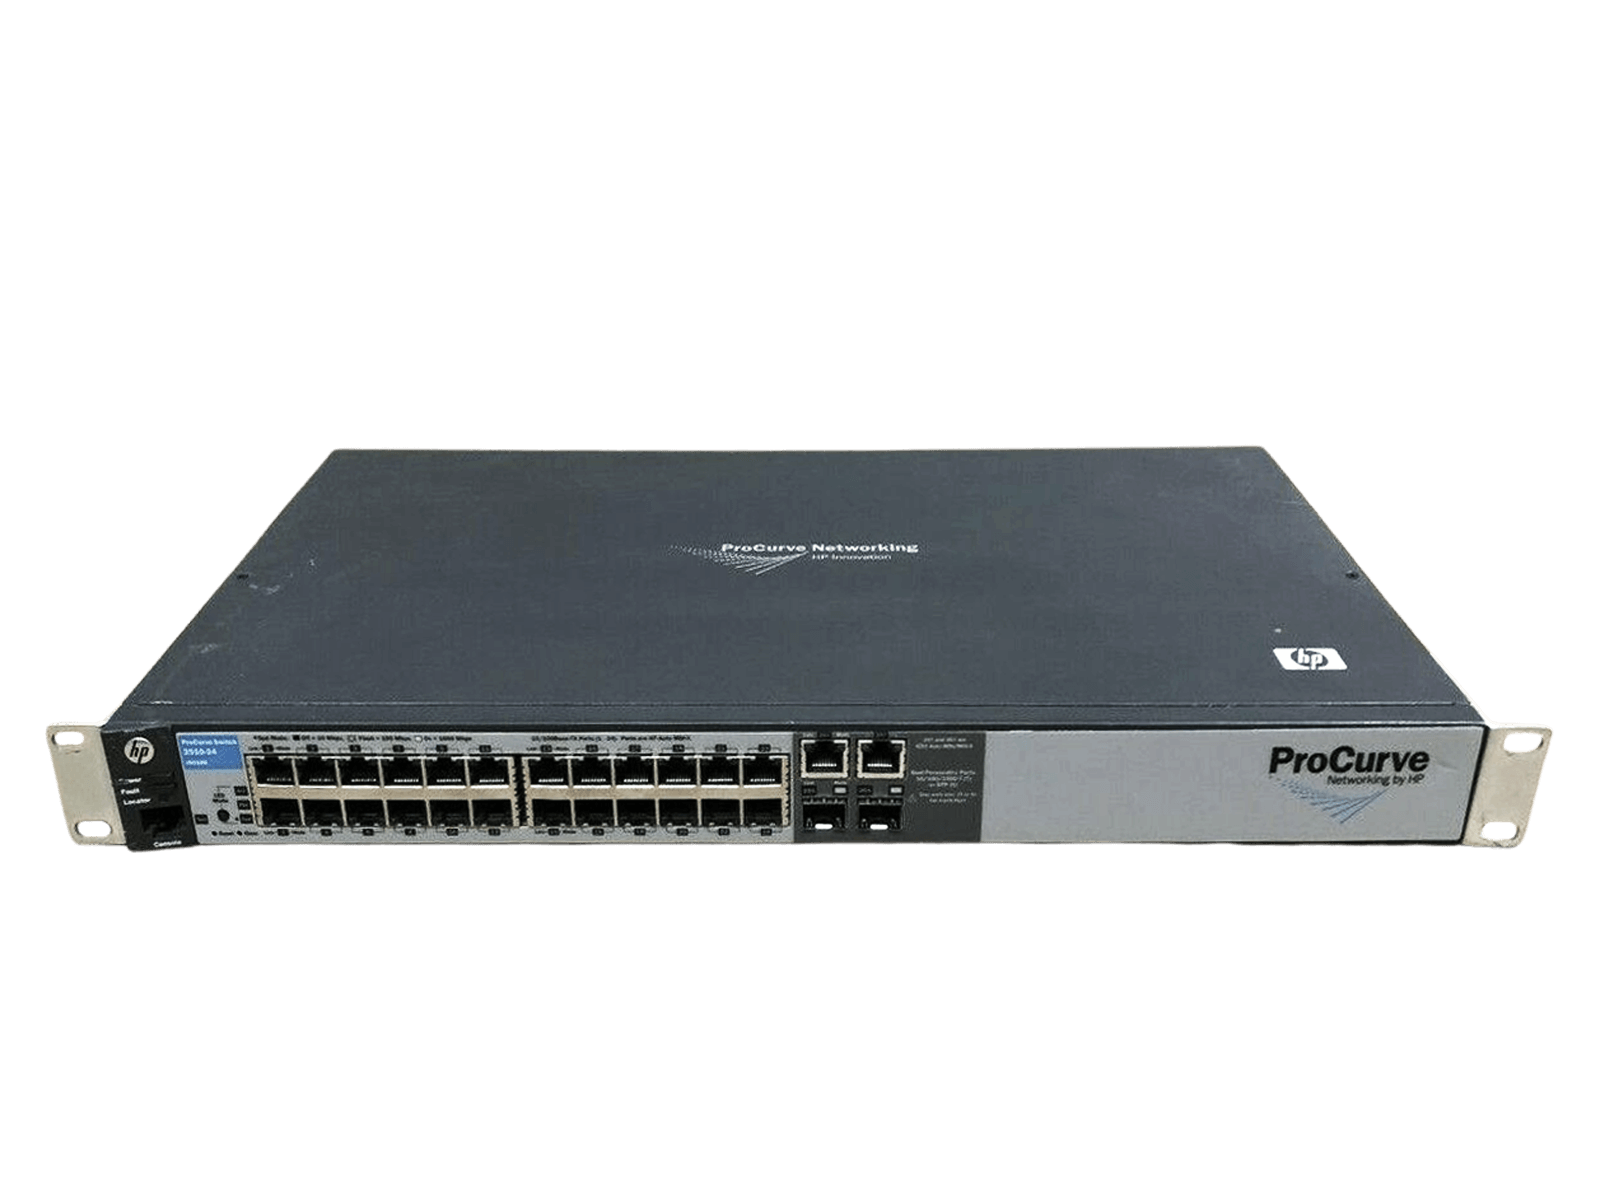 HP Procurve J9019B 2510 24 Port 10/100 Ethernet 2 Port Gigabit RJ-45 SFP Switch.